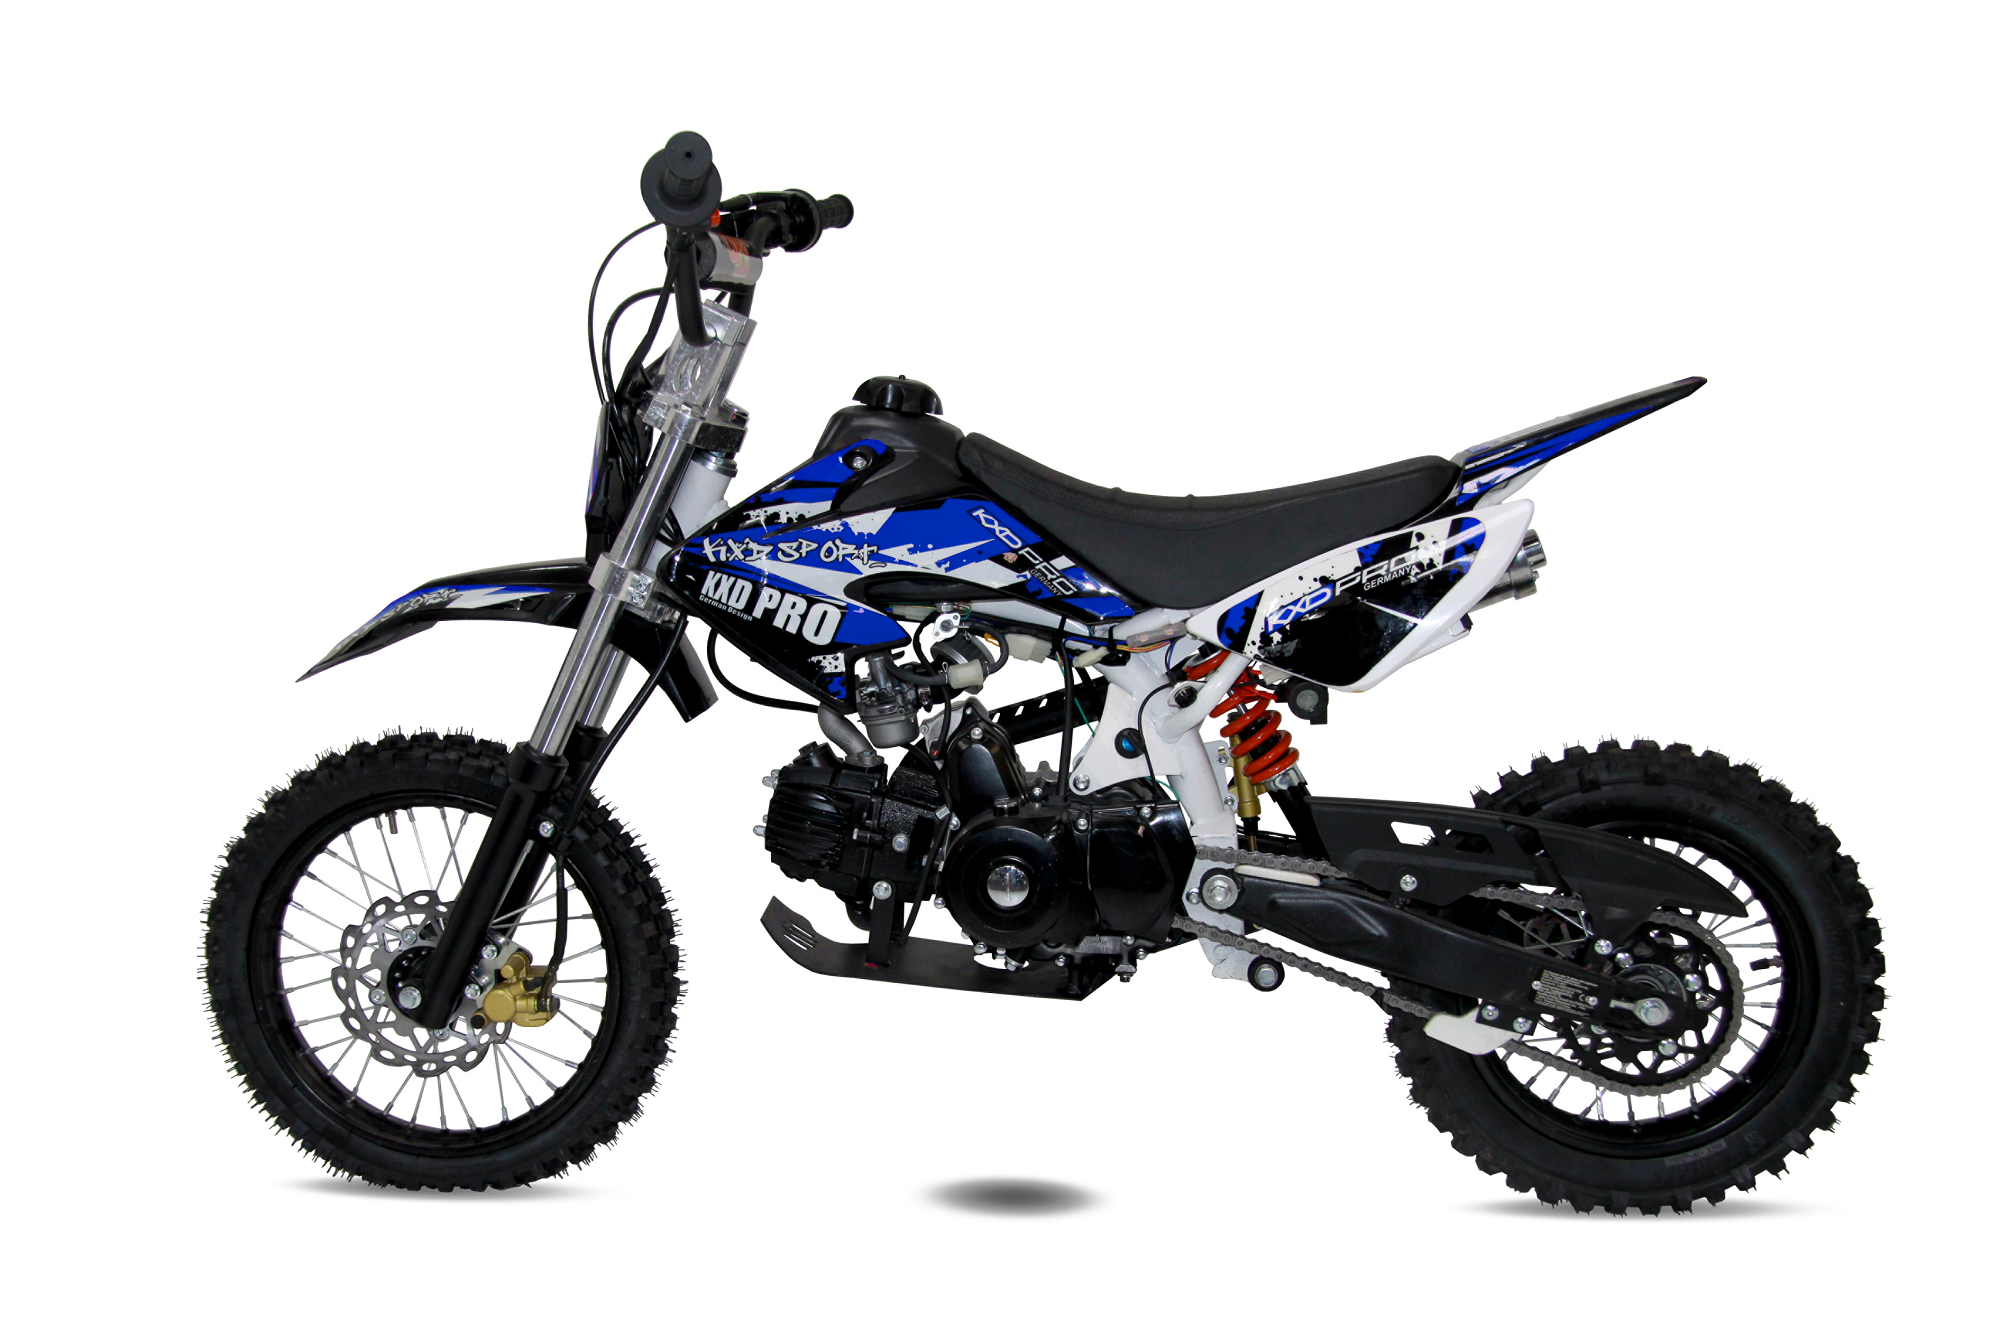 Motocicleta cross copii kxd 125cc db 607a, 4t, roti 14/12", culoare negru/albastru, automatic